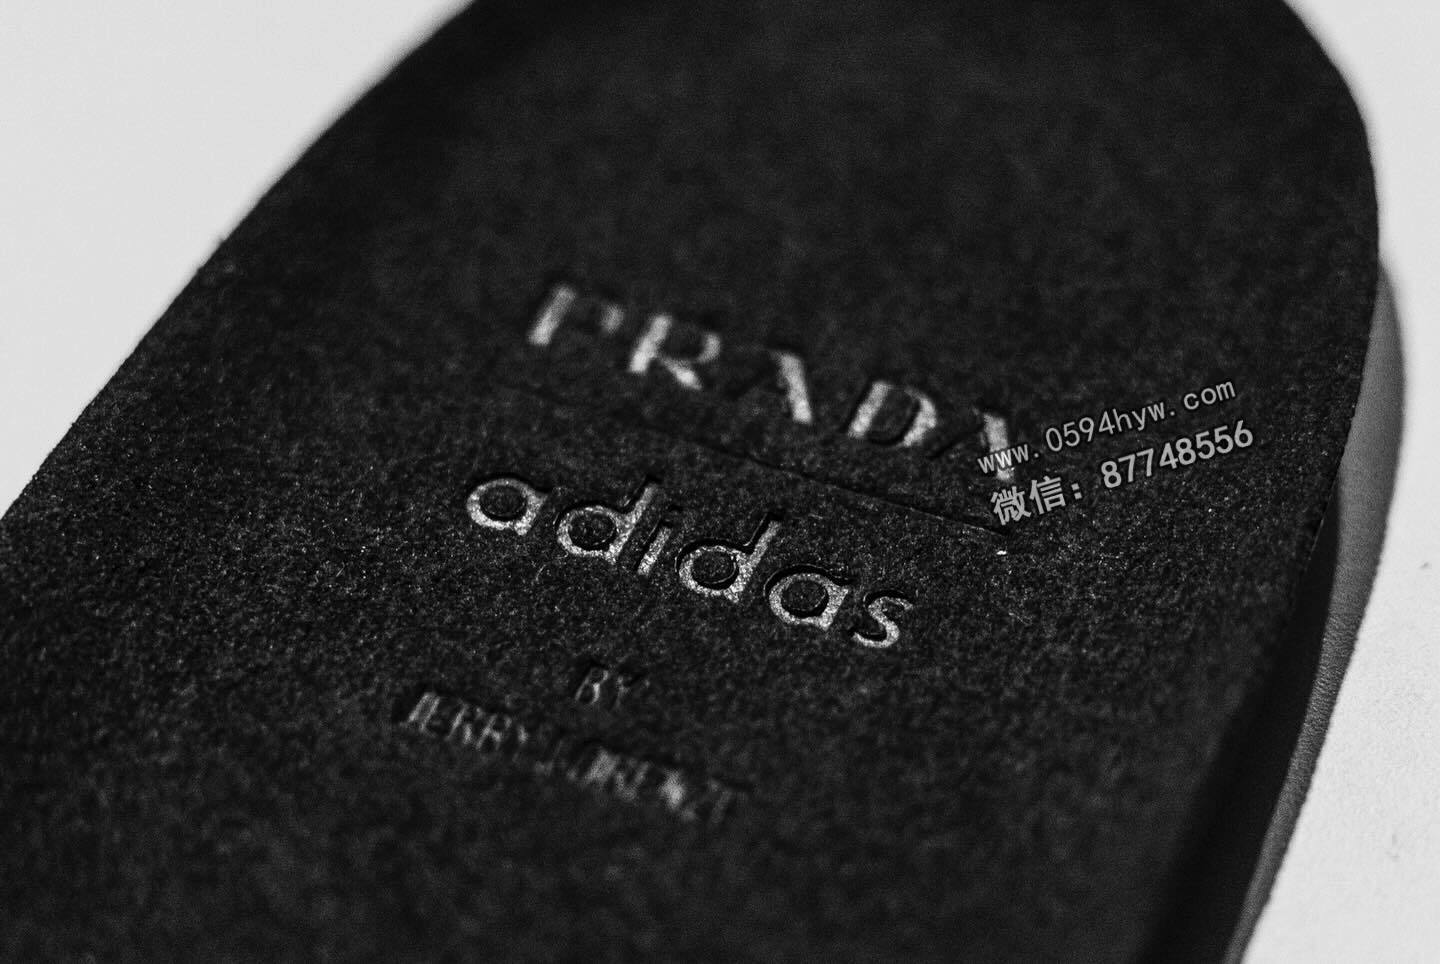 贝壳头, 联名, 新鞋, Prada, Originals, Jerry Lorenzo, Adidas